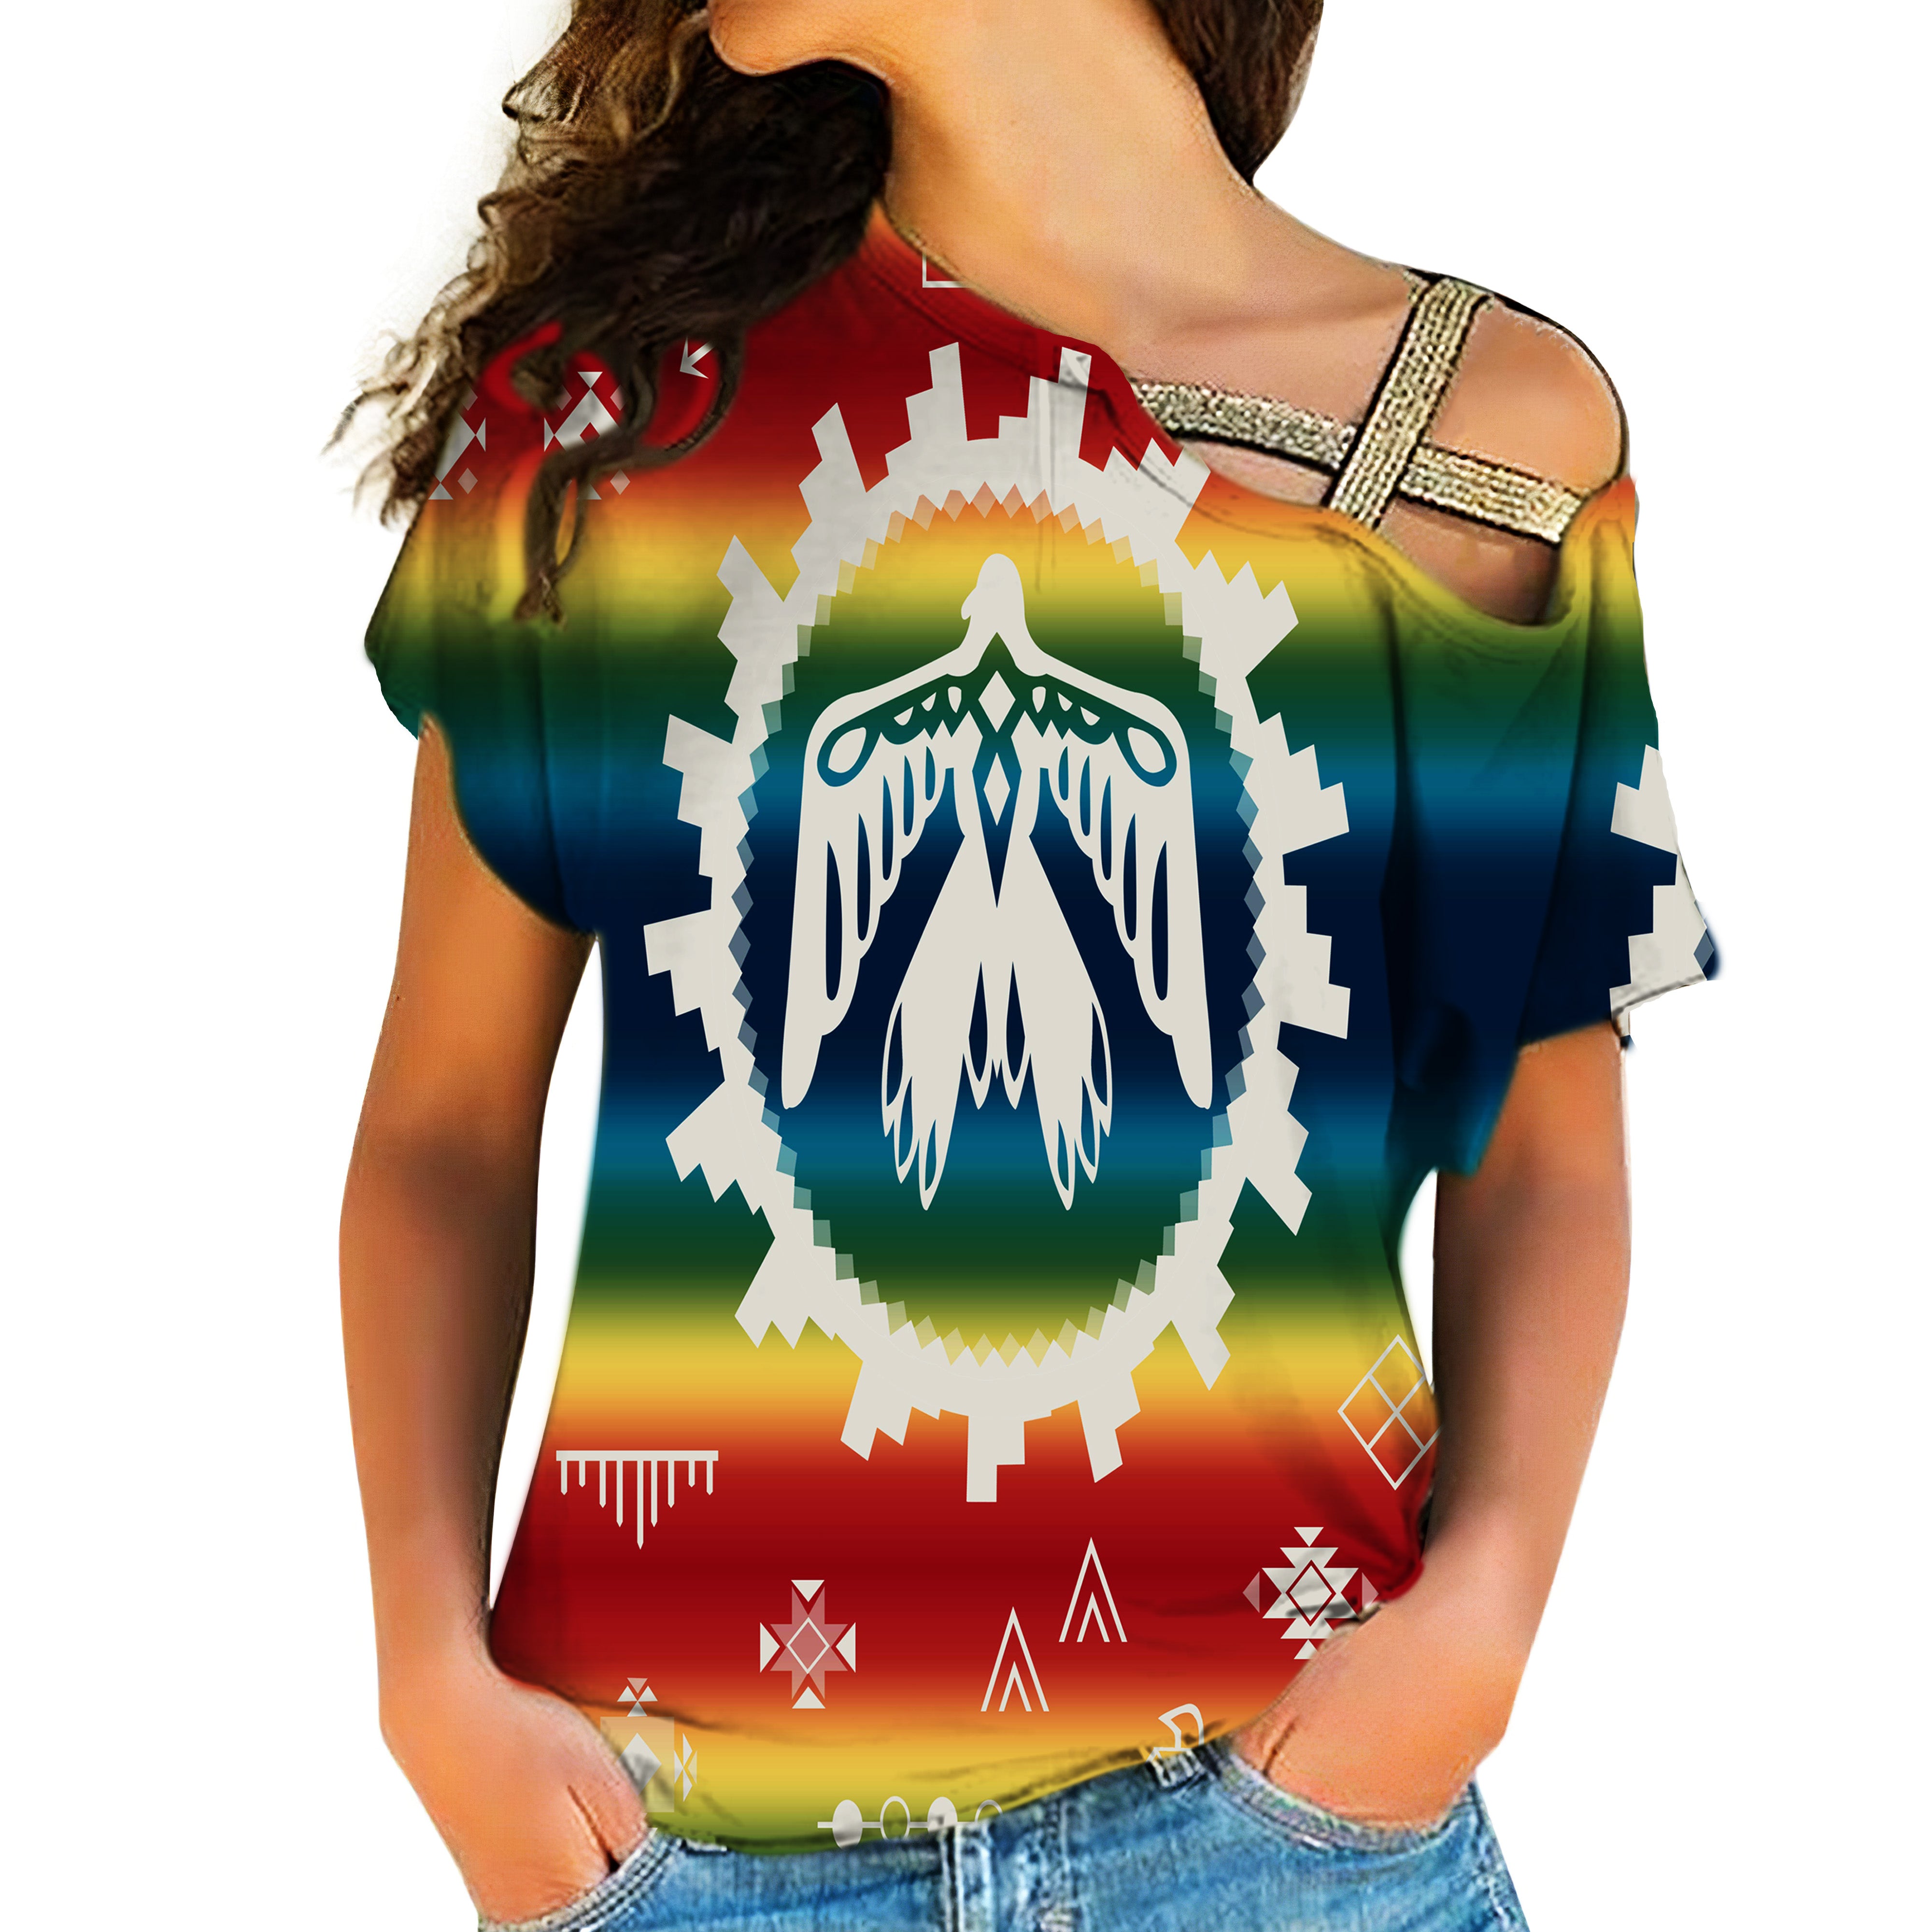 Powwow Store native american cross shoulder shirt 1